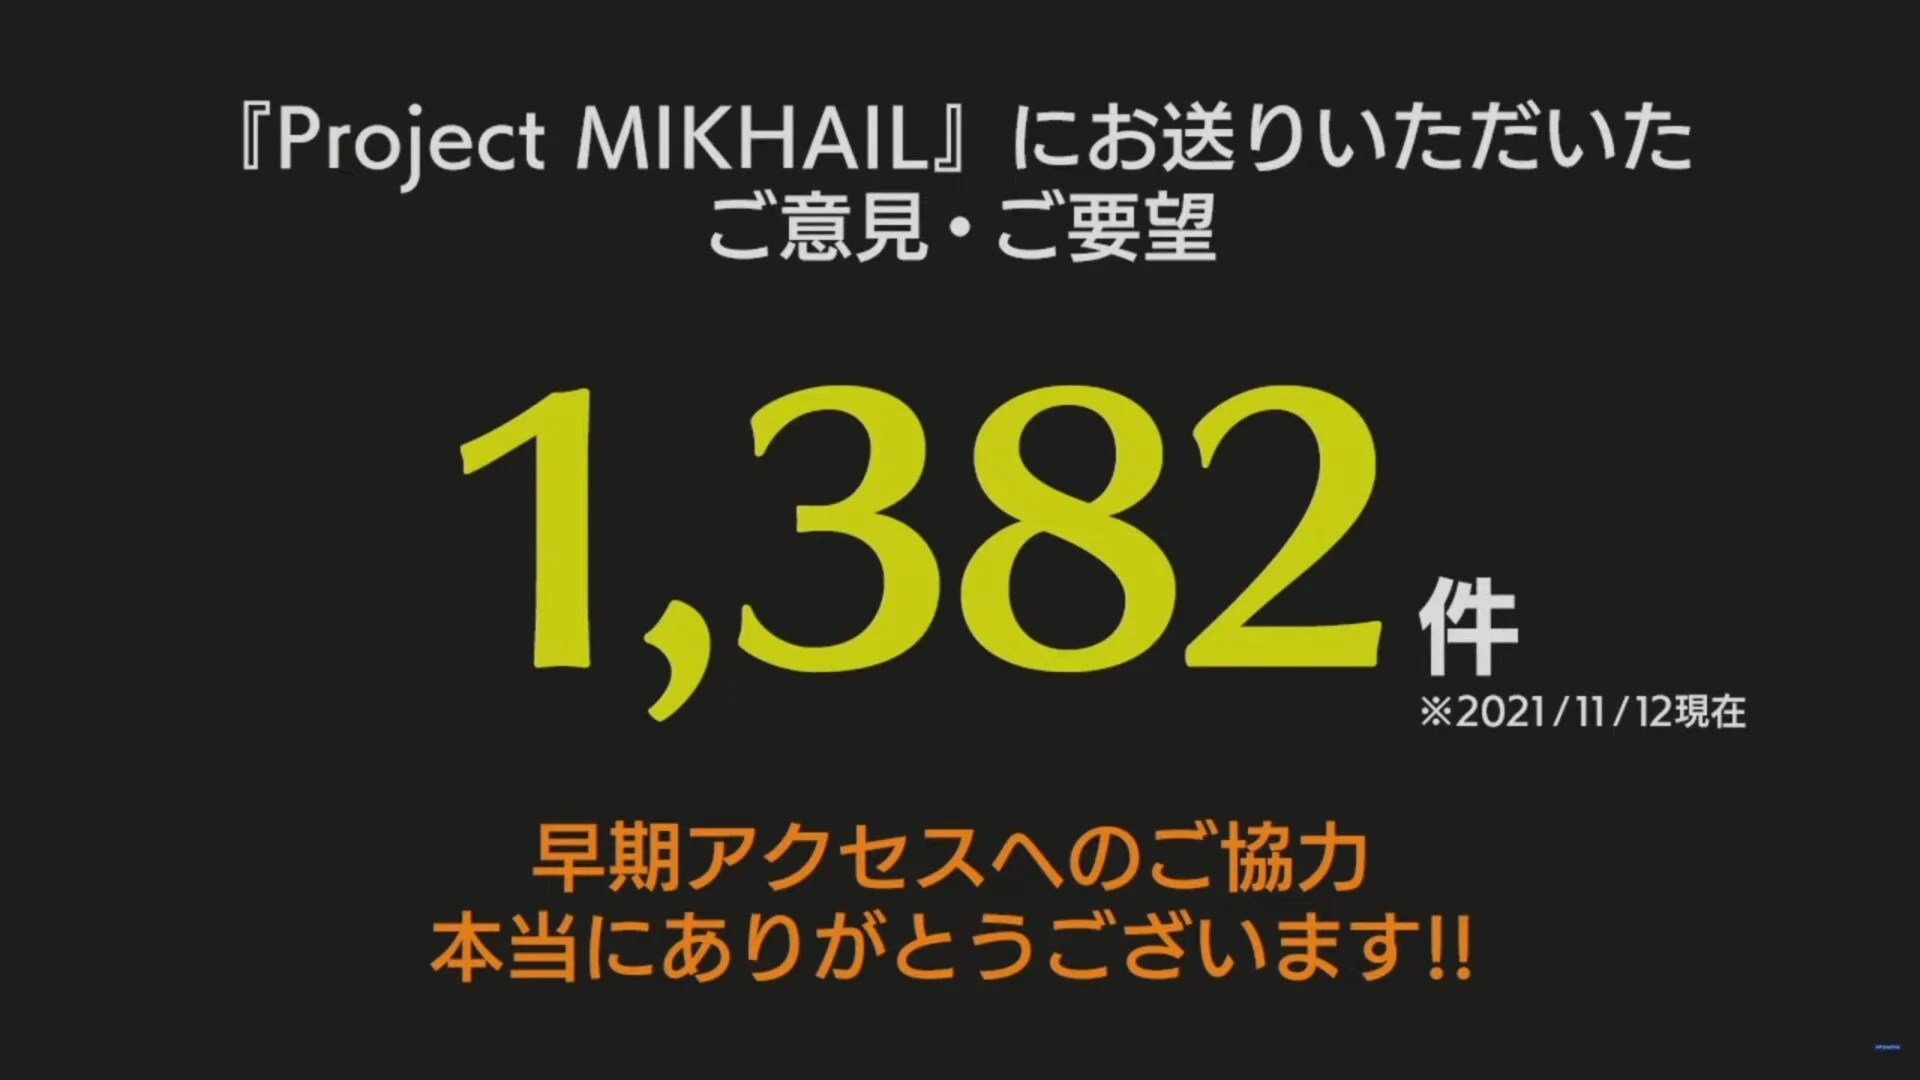 Projekti Mikhail 1 2